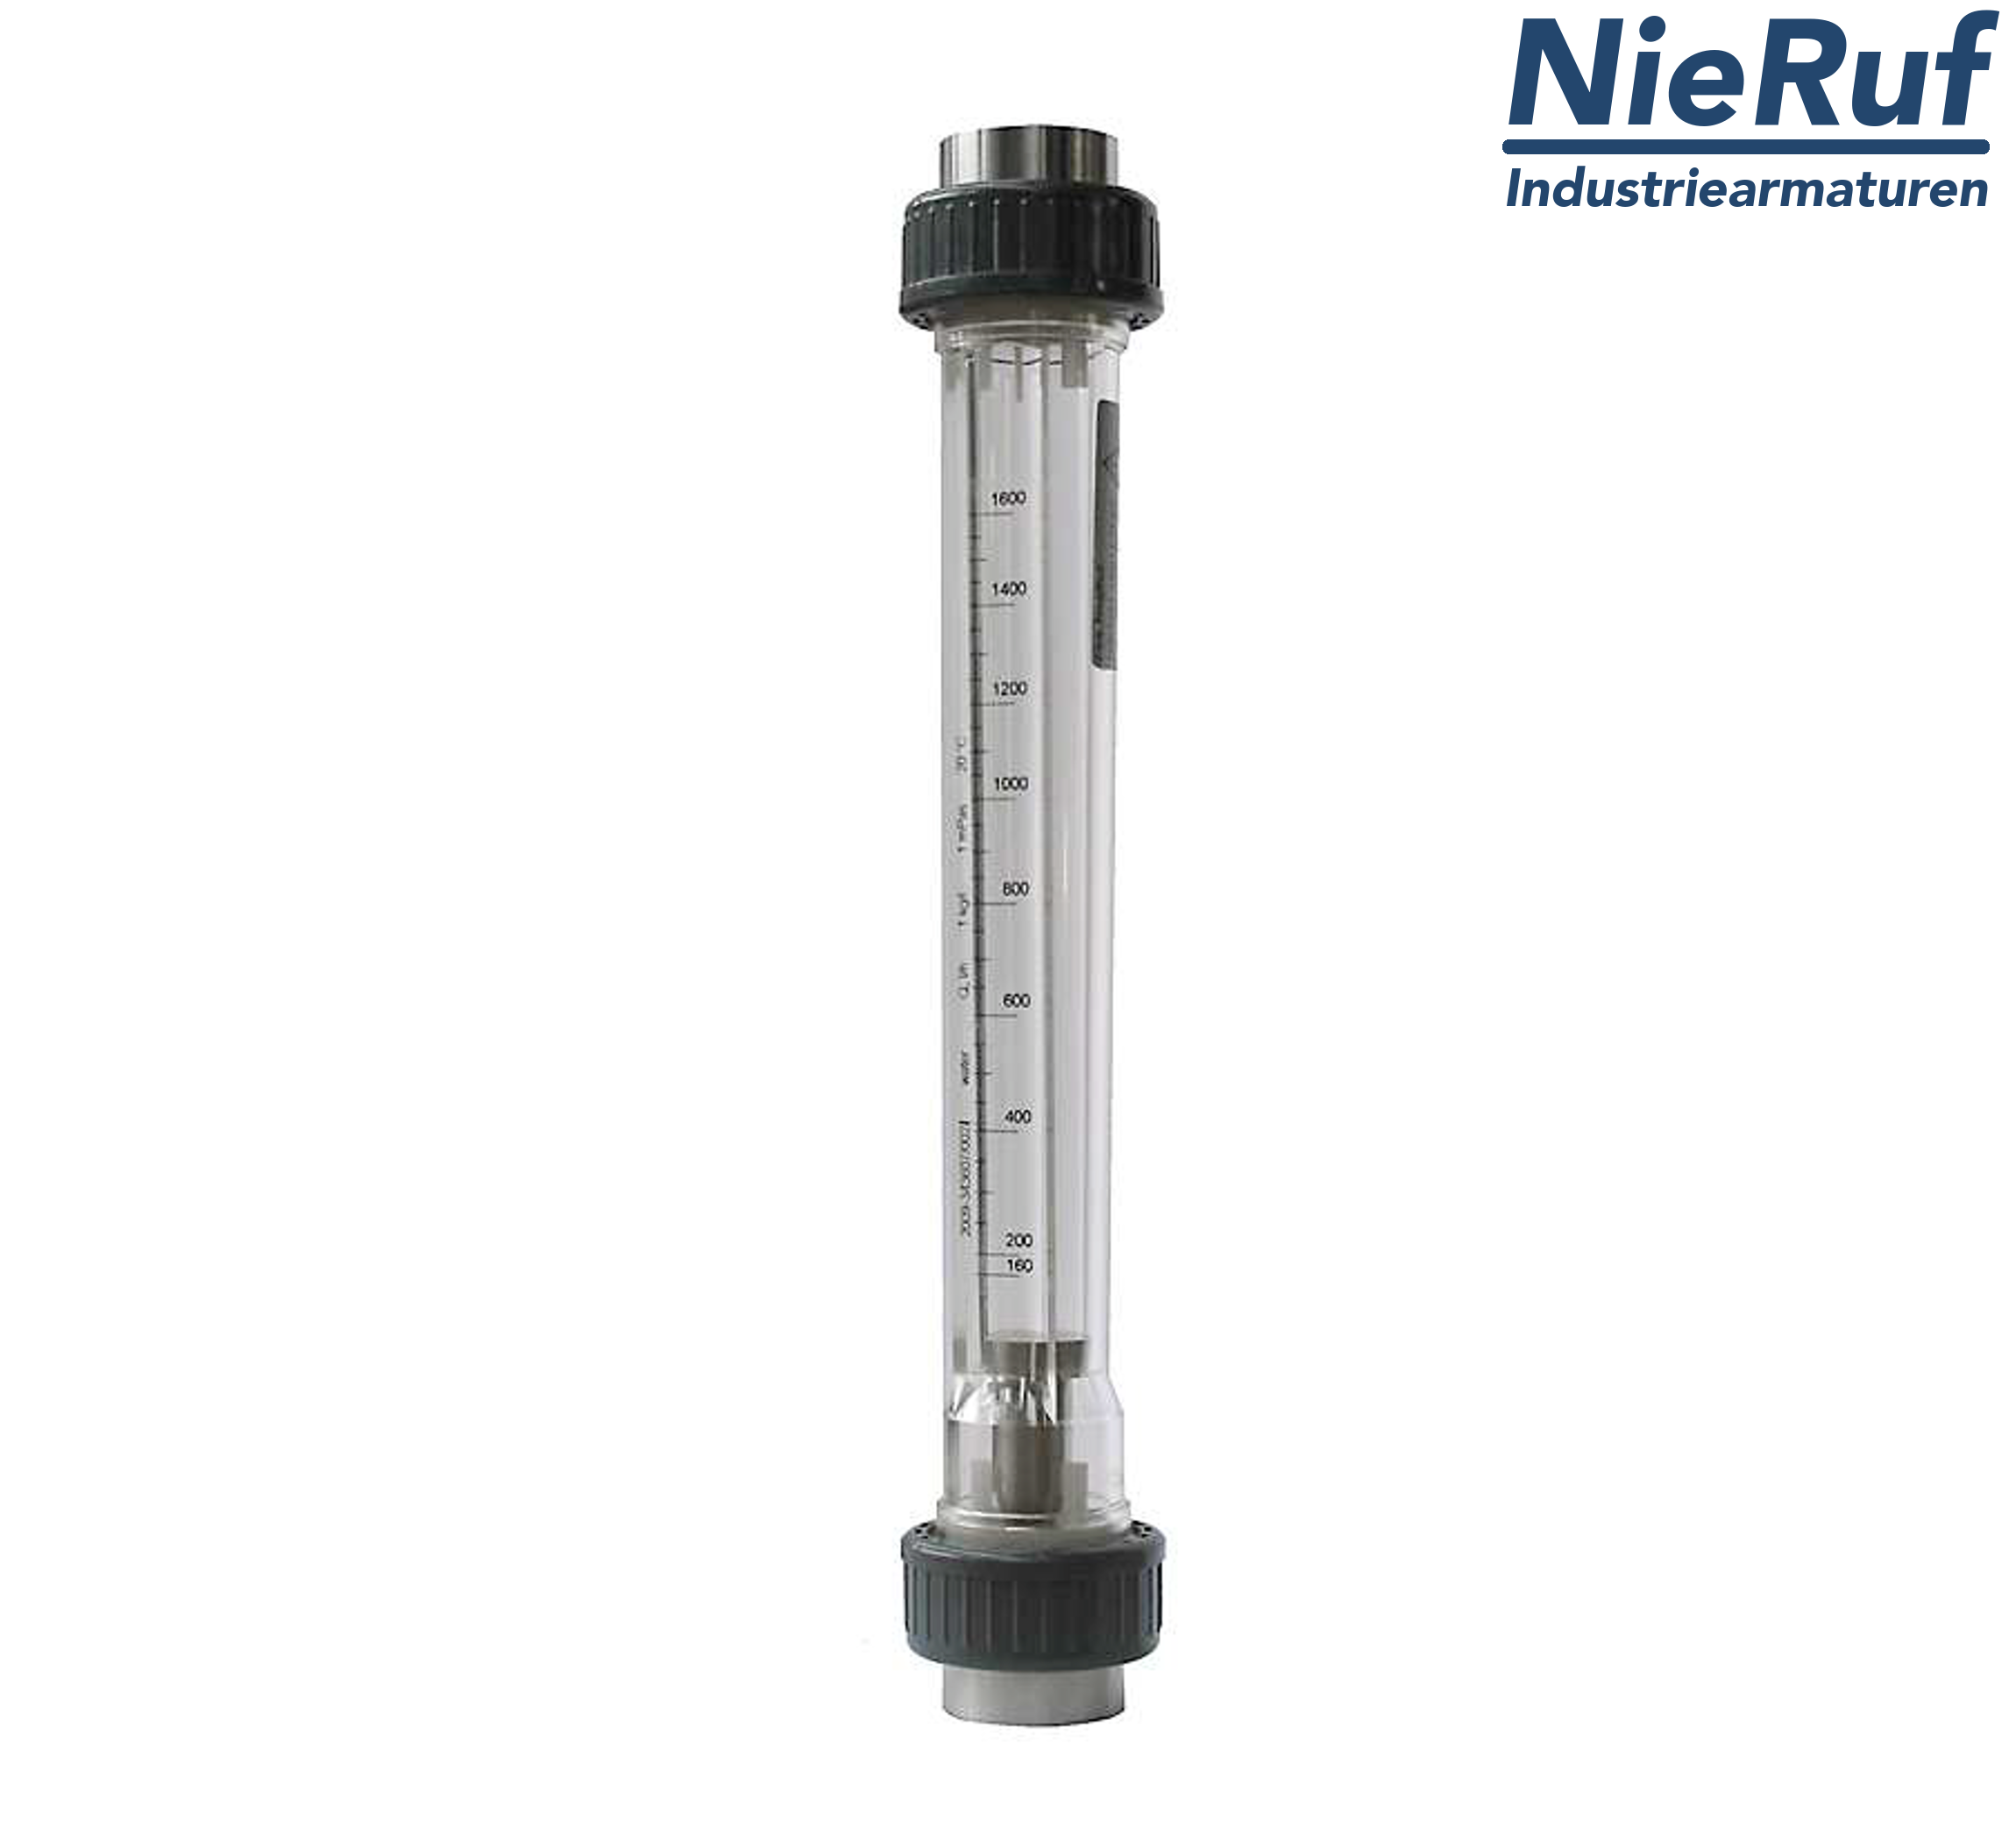 Variable area flowmeter 1" inch NPT 250.0 - 2500 l/h water FKM